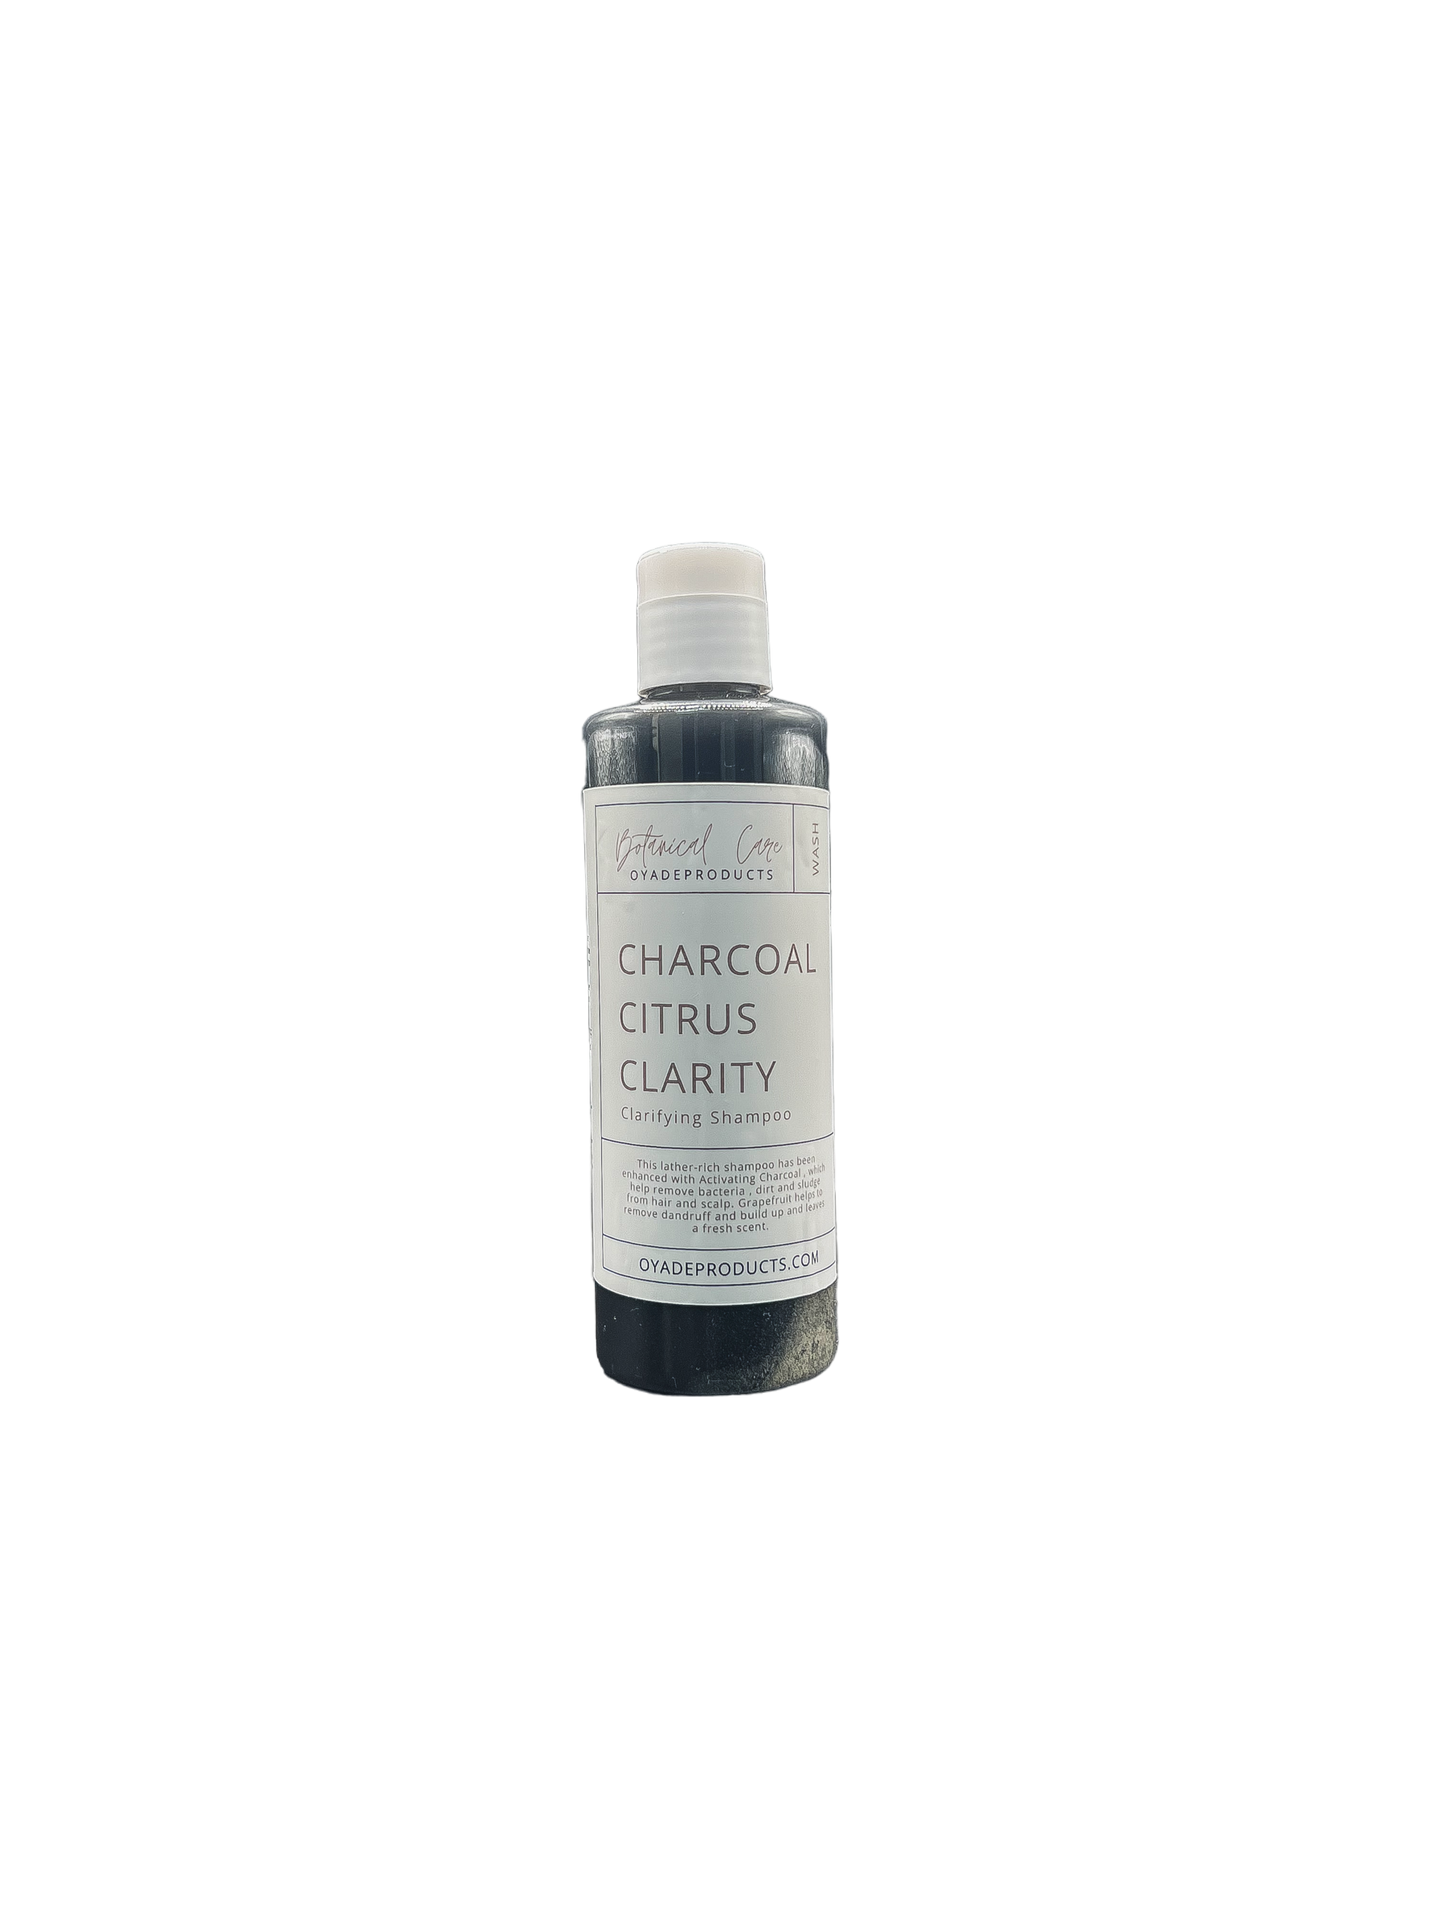 Charcoal Citrus Clarity /.          Clarifying Shampoo